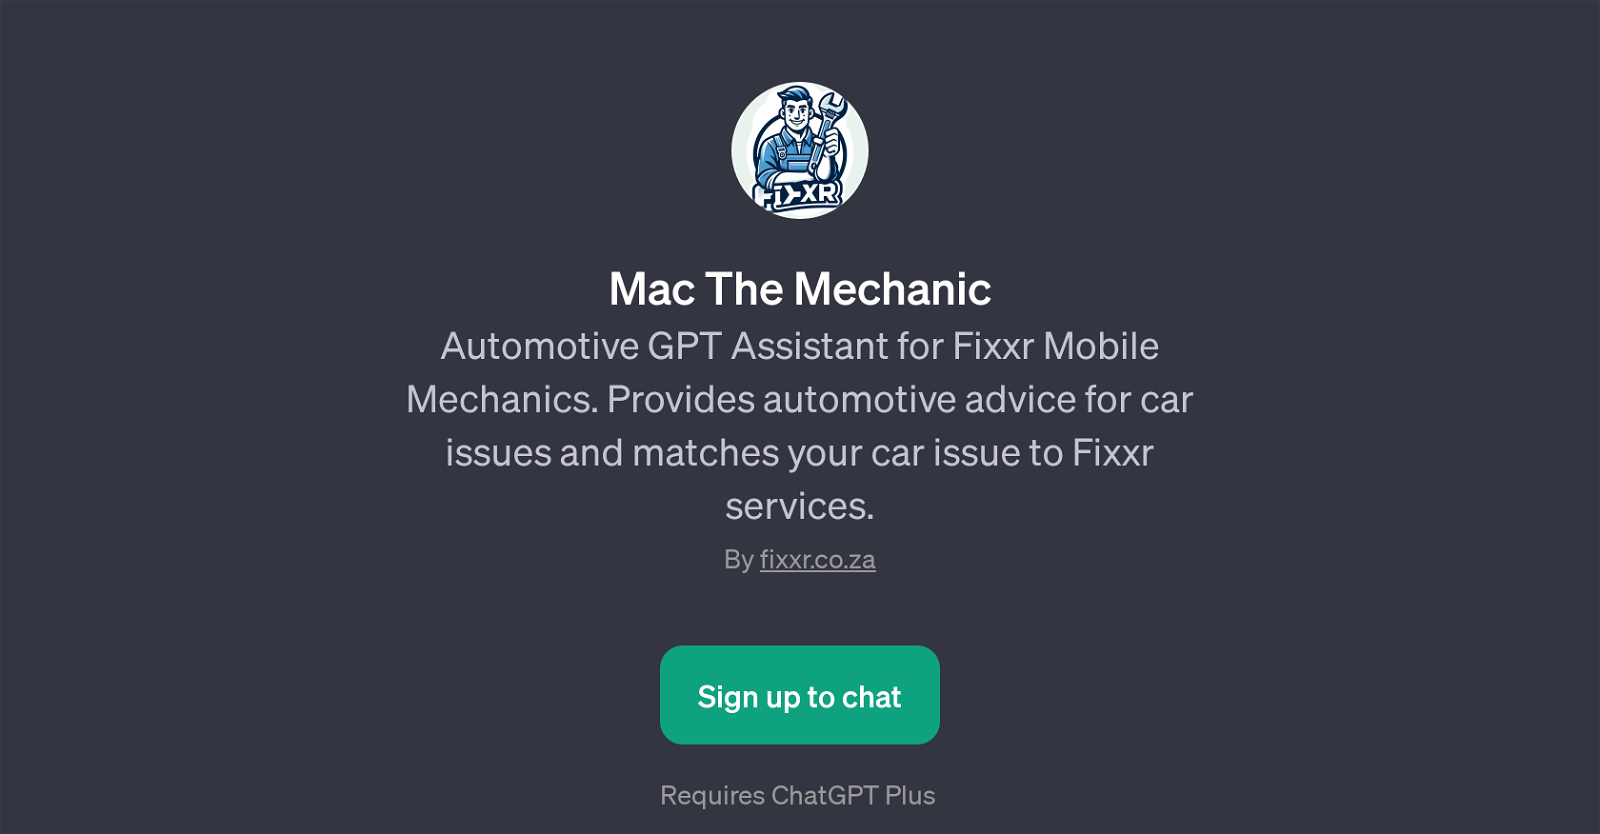 Mac The Mechanic website